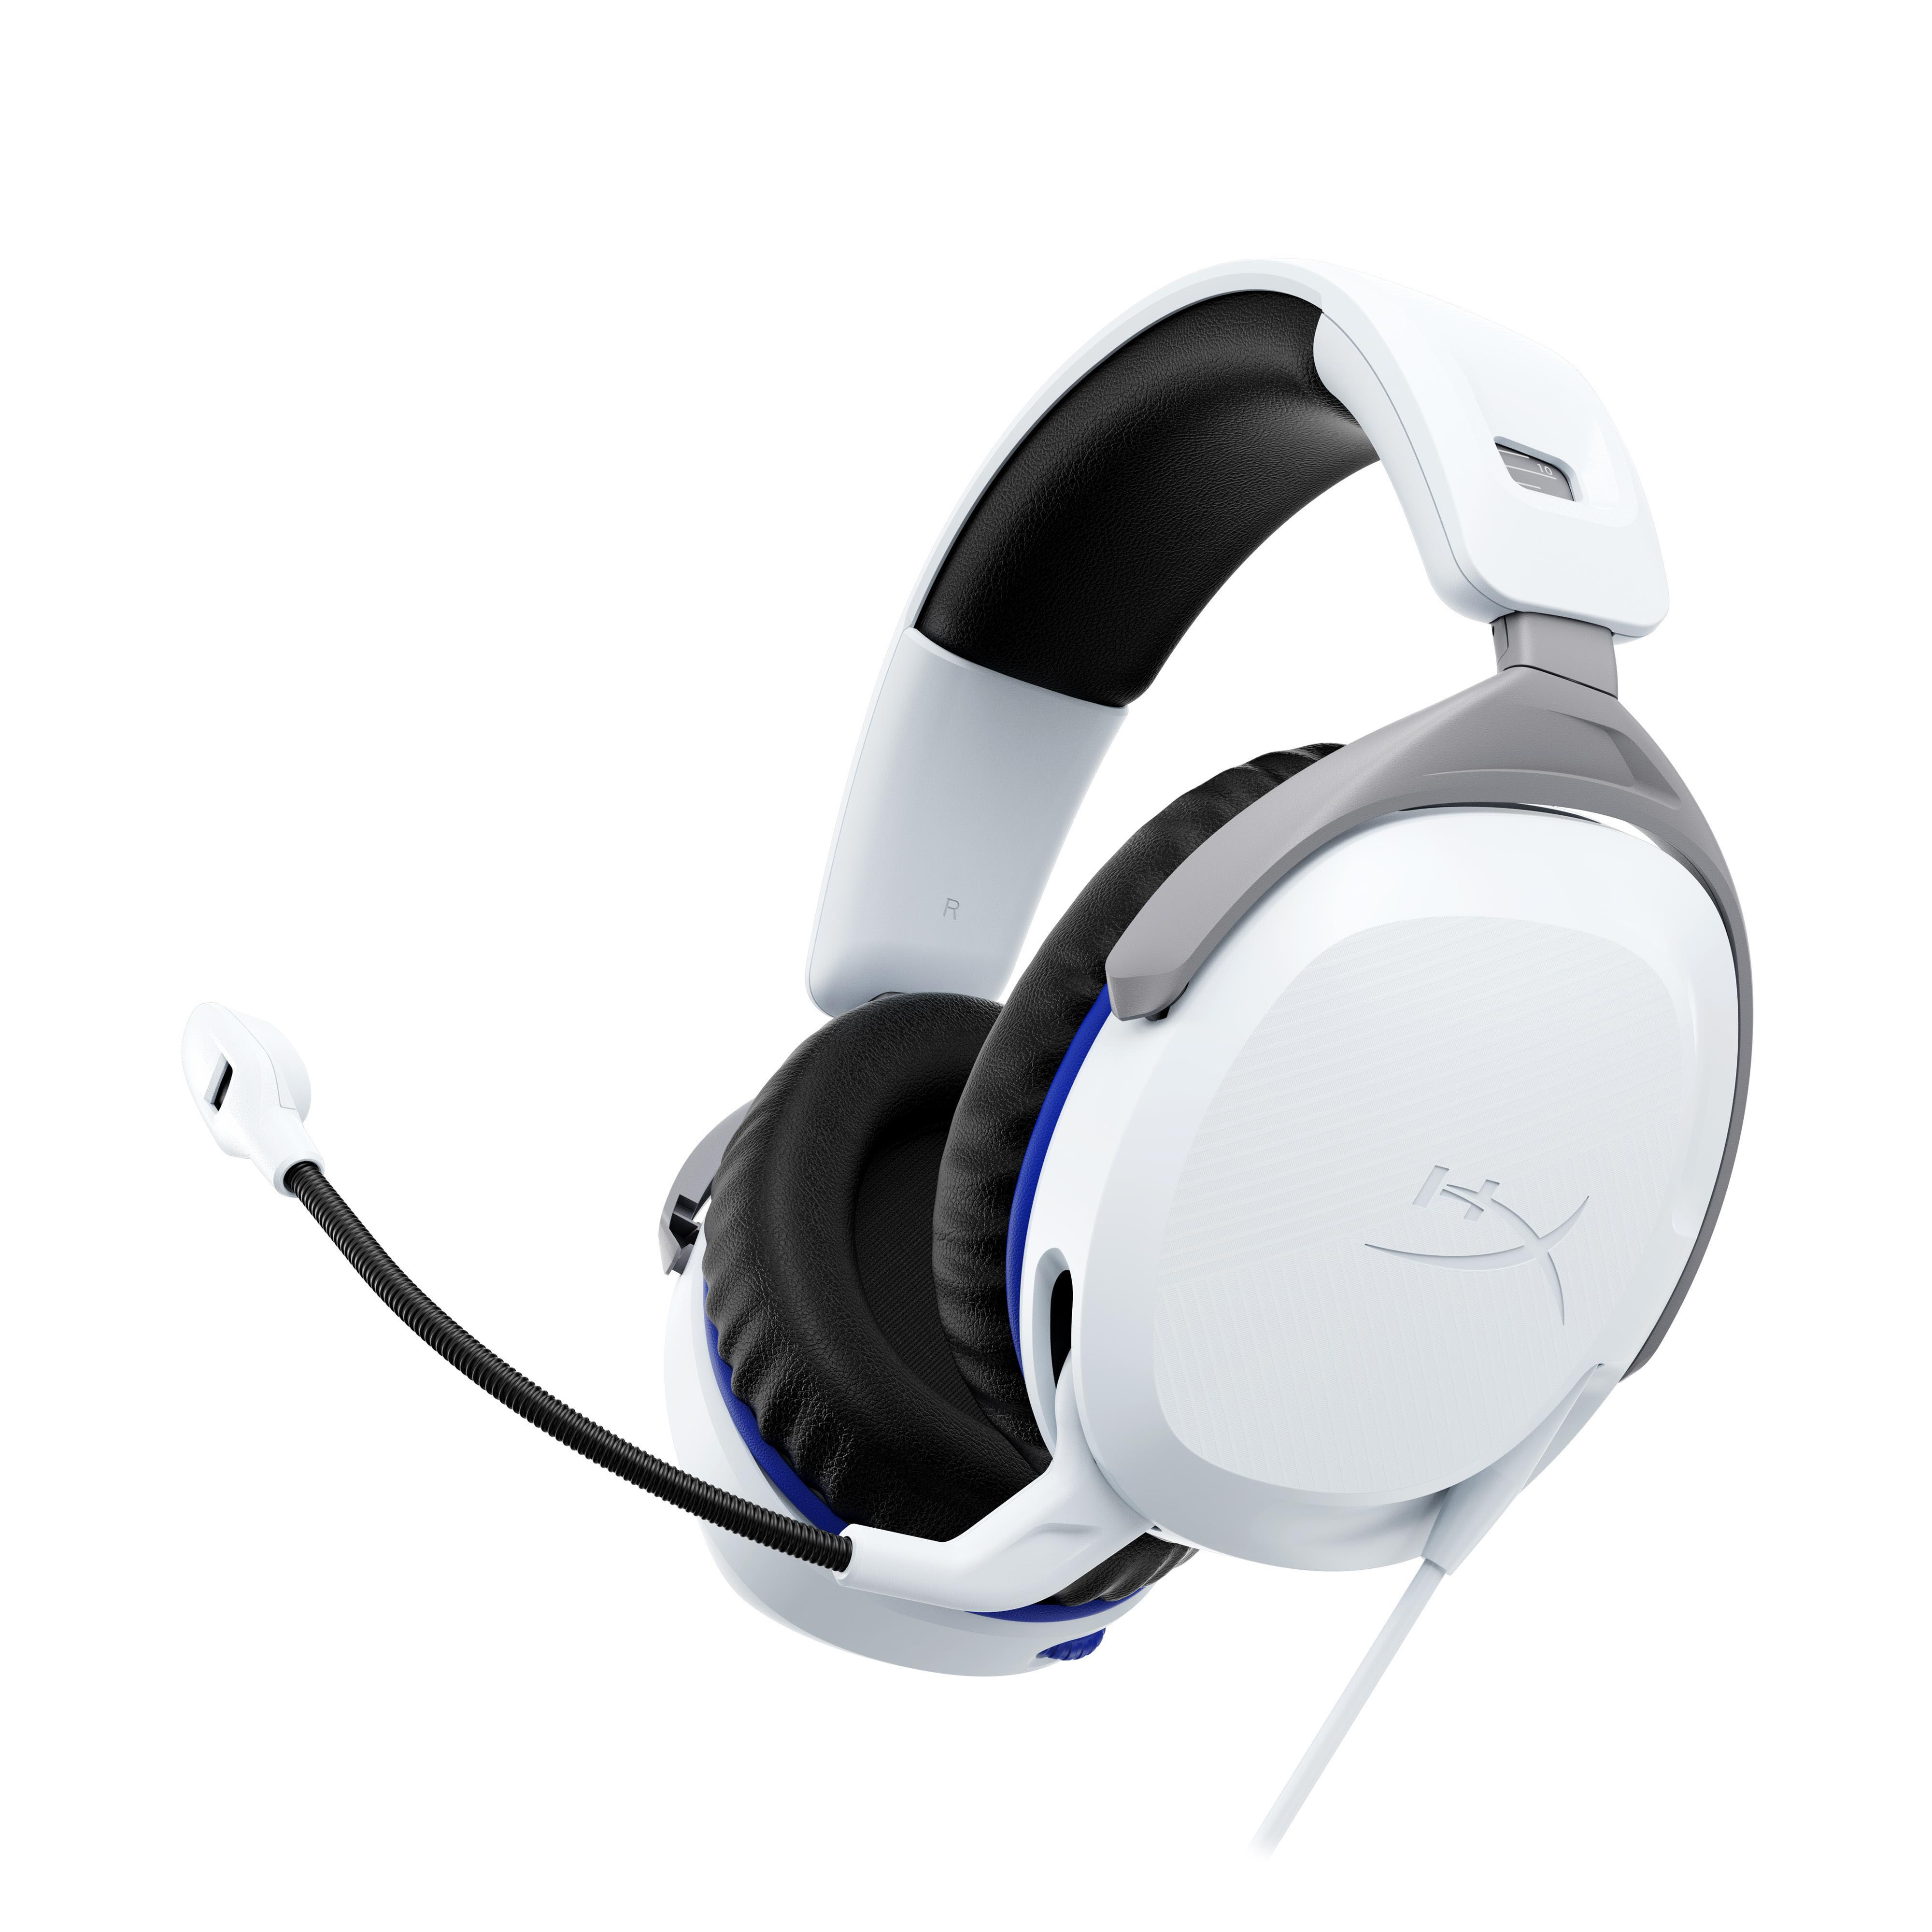 HYPERX 75X29AA Cloud Stinger 2 Over-ear Gaming für Headset Weiß PlayStation